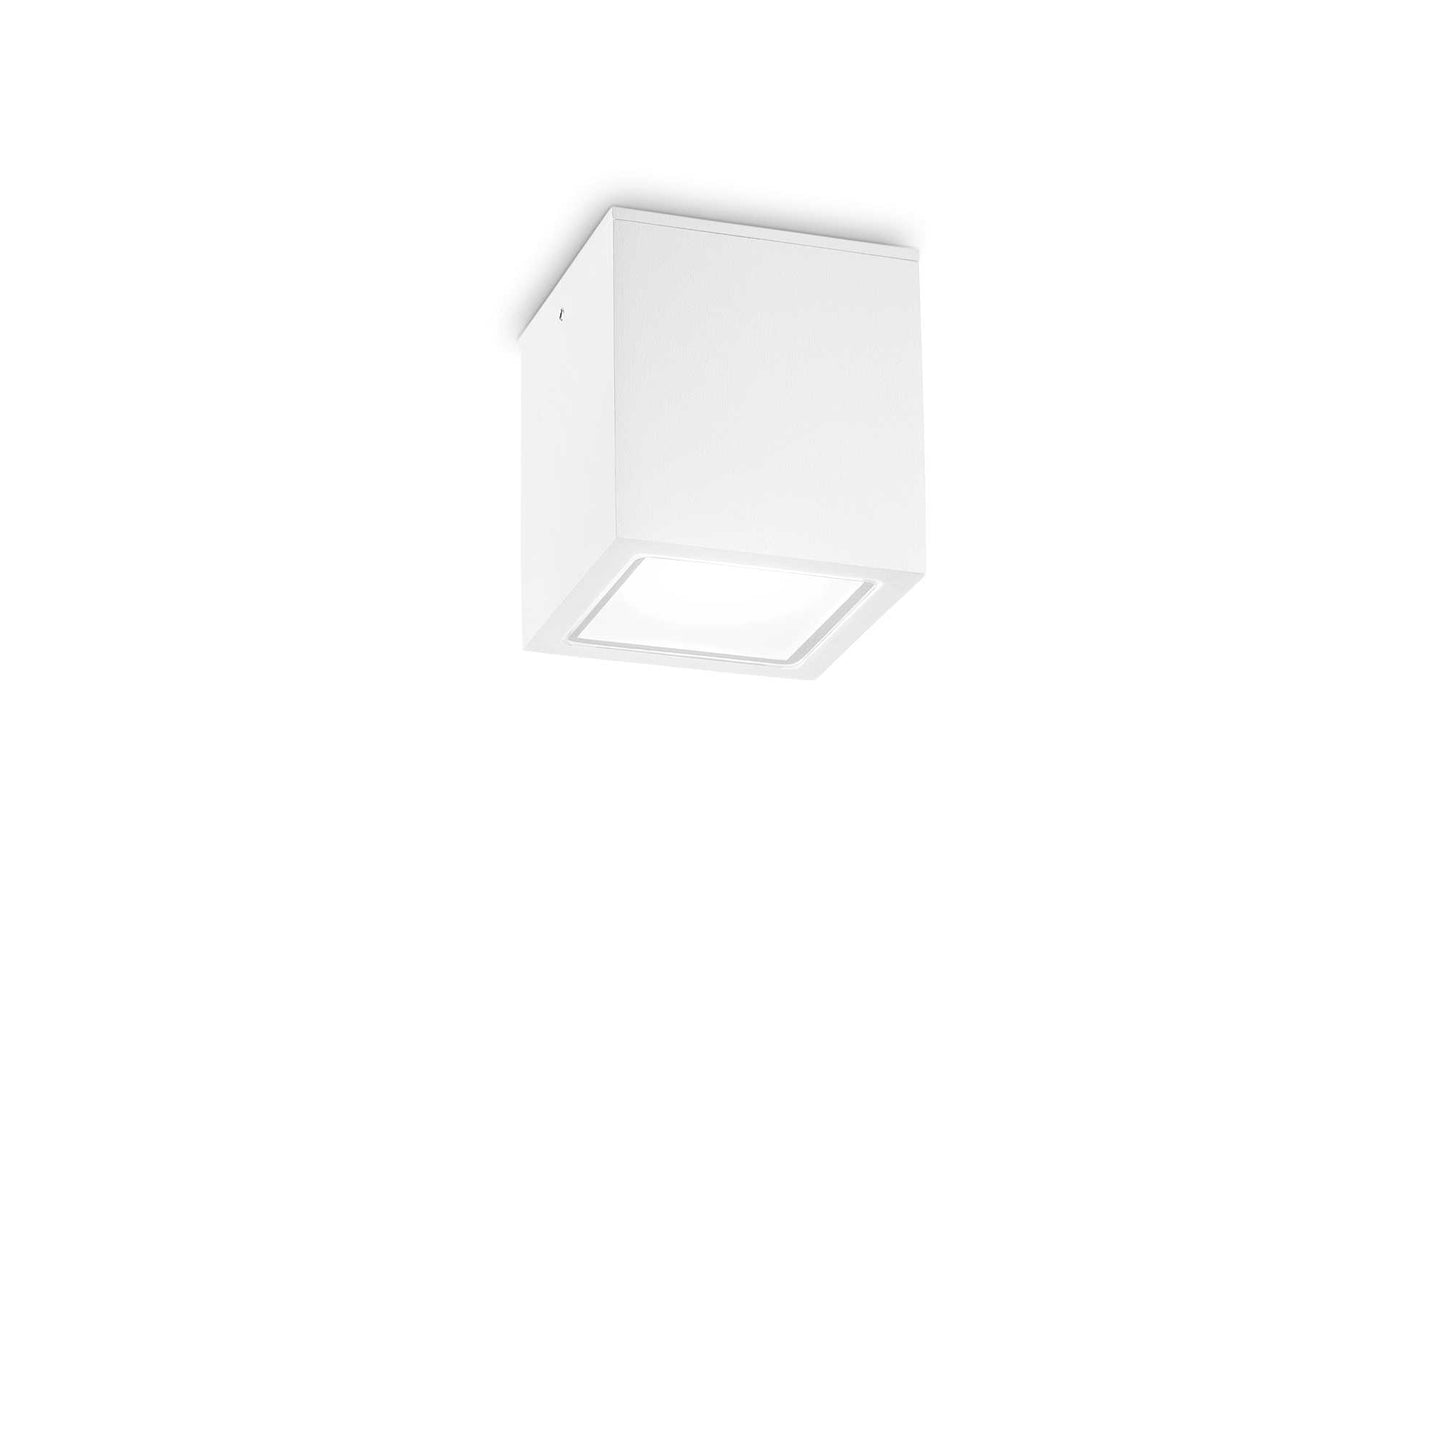 Plafoniera bianca da esterno Ideal Lux 251561 TECHO SMALL GU10 LED IP54 lampada soffitto moderna